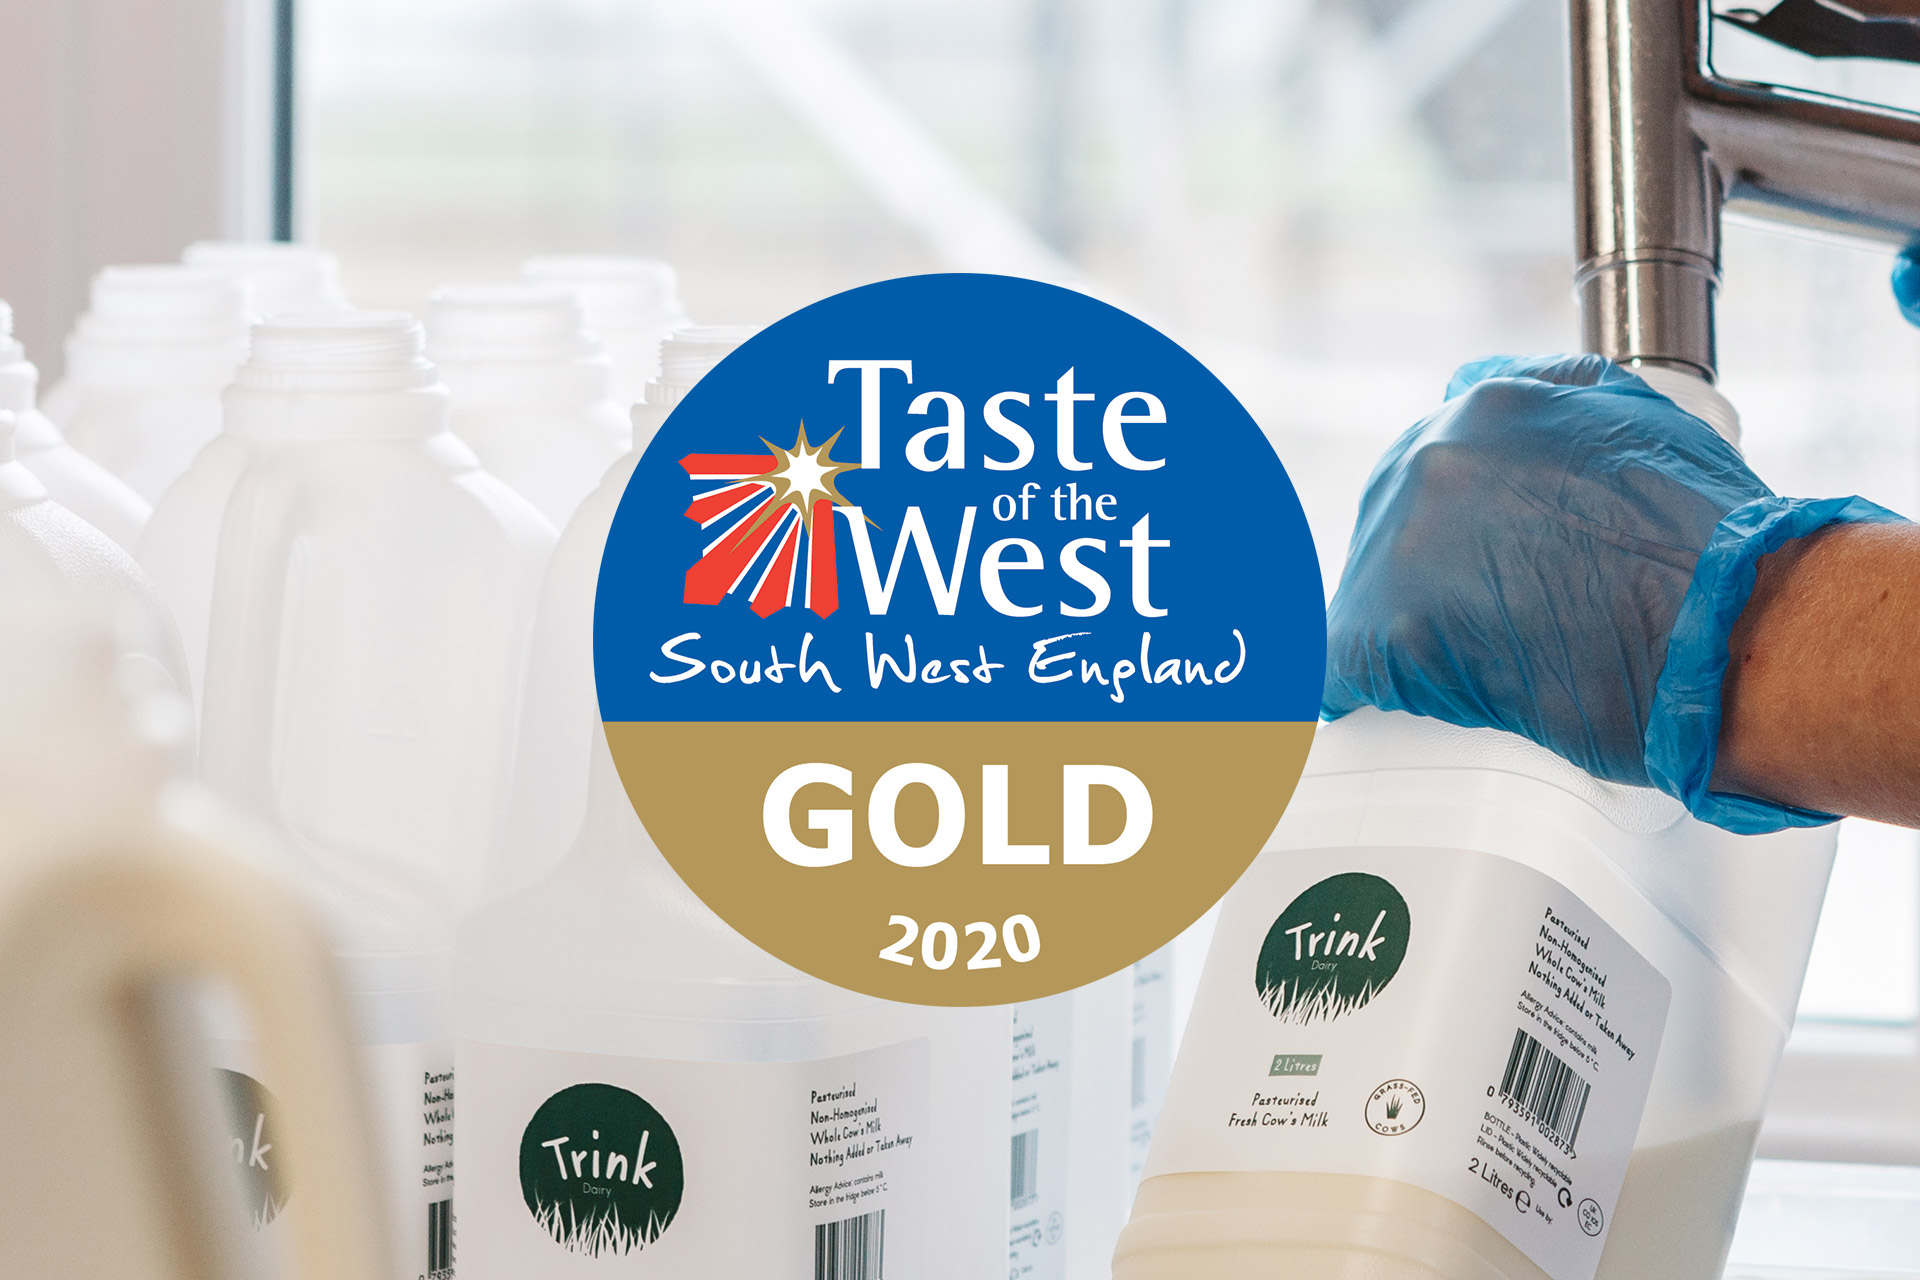 Taste of The West Gold Award